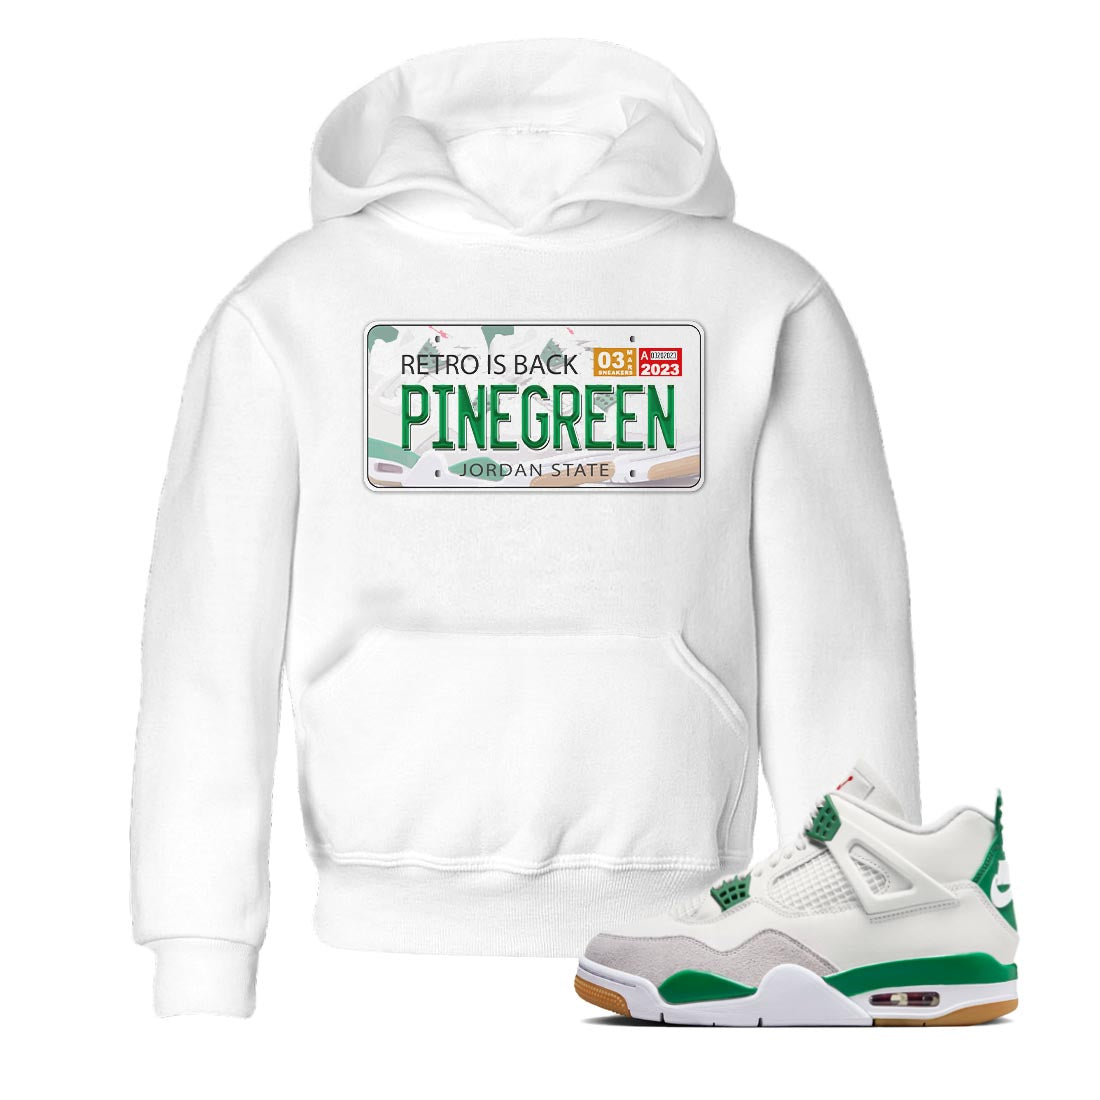 Jordan 4 Pine Green SB Sneaker Match Tees Jordan Plate Sneaker Tees 4s Pine Green Nike SB Sneaker Tees Sneaker Release Shirts Kids Shirts White 1